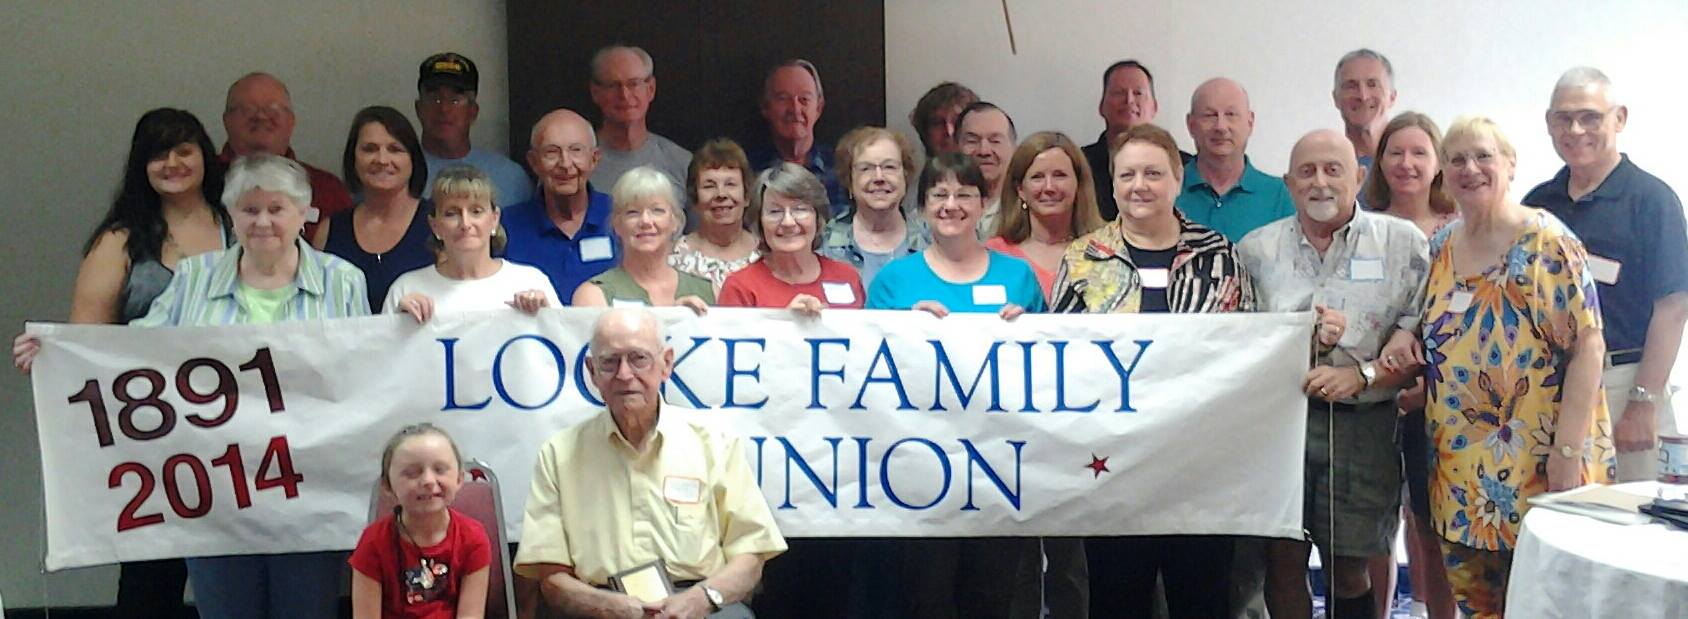 2014 Locke Family Association Reunion Gettysburg PA